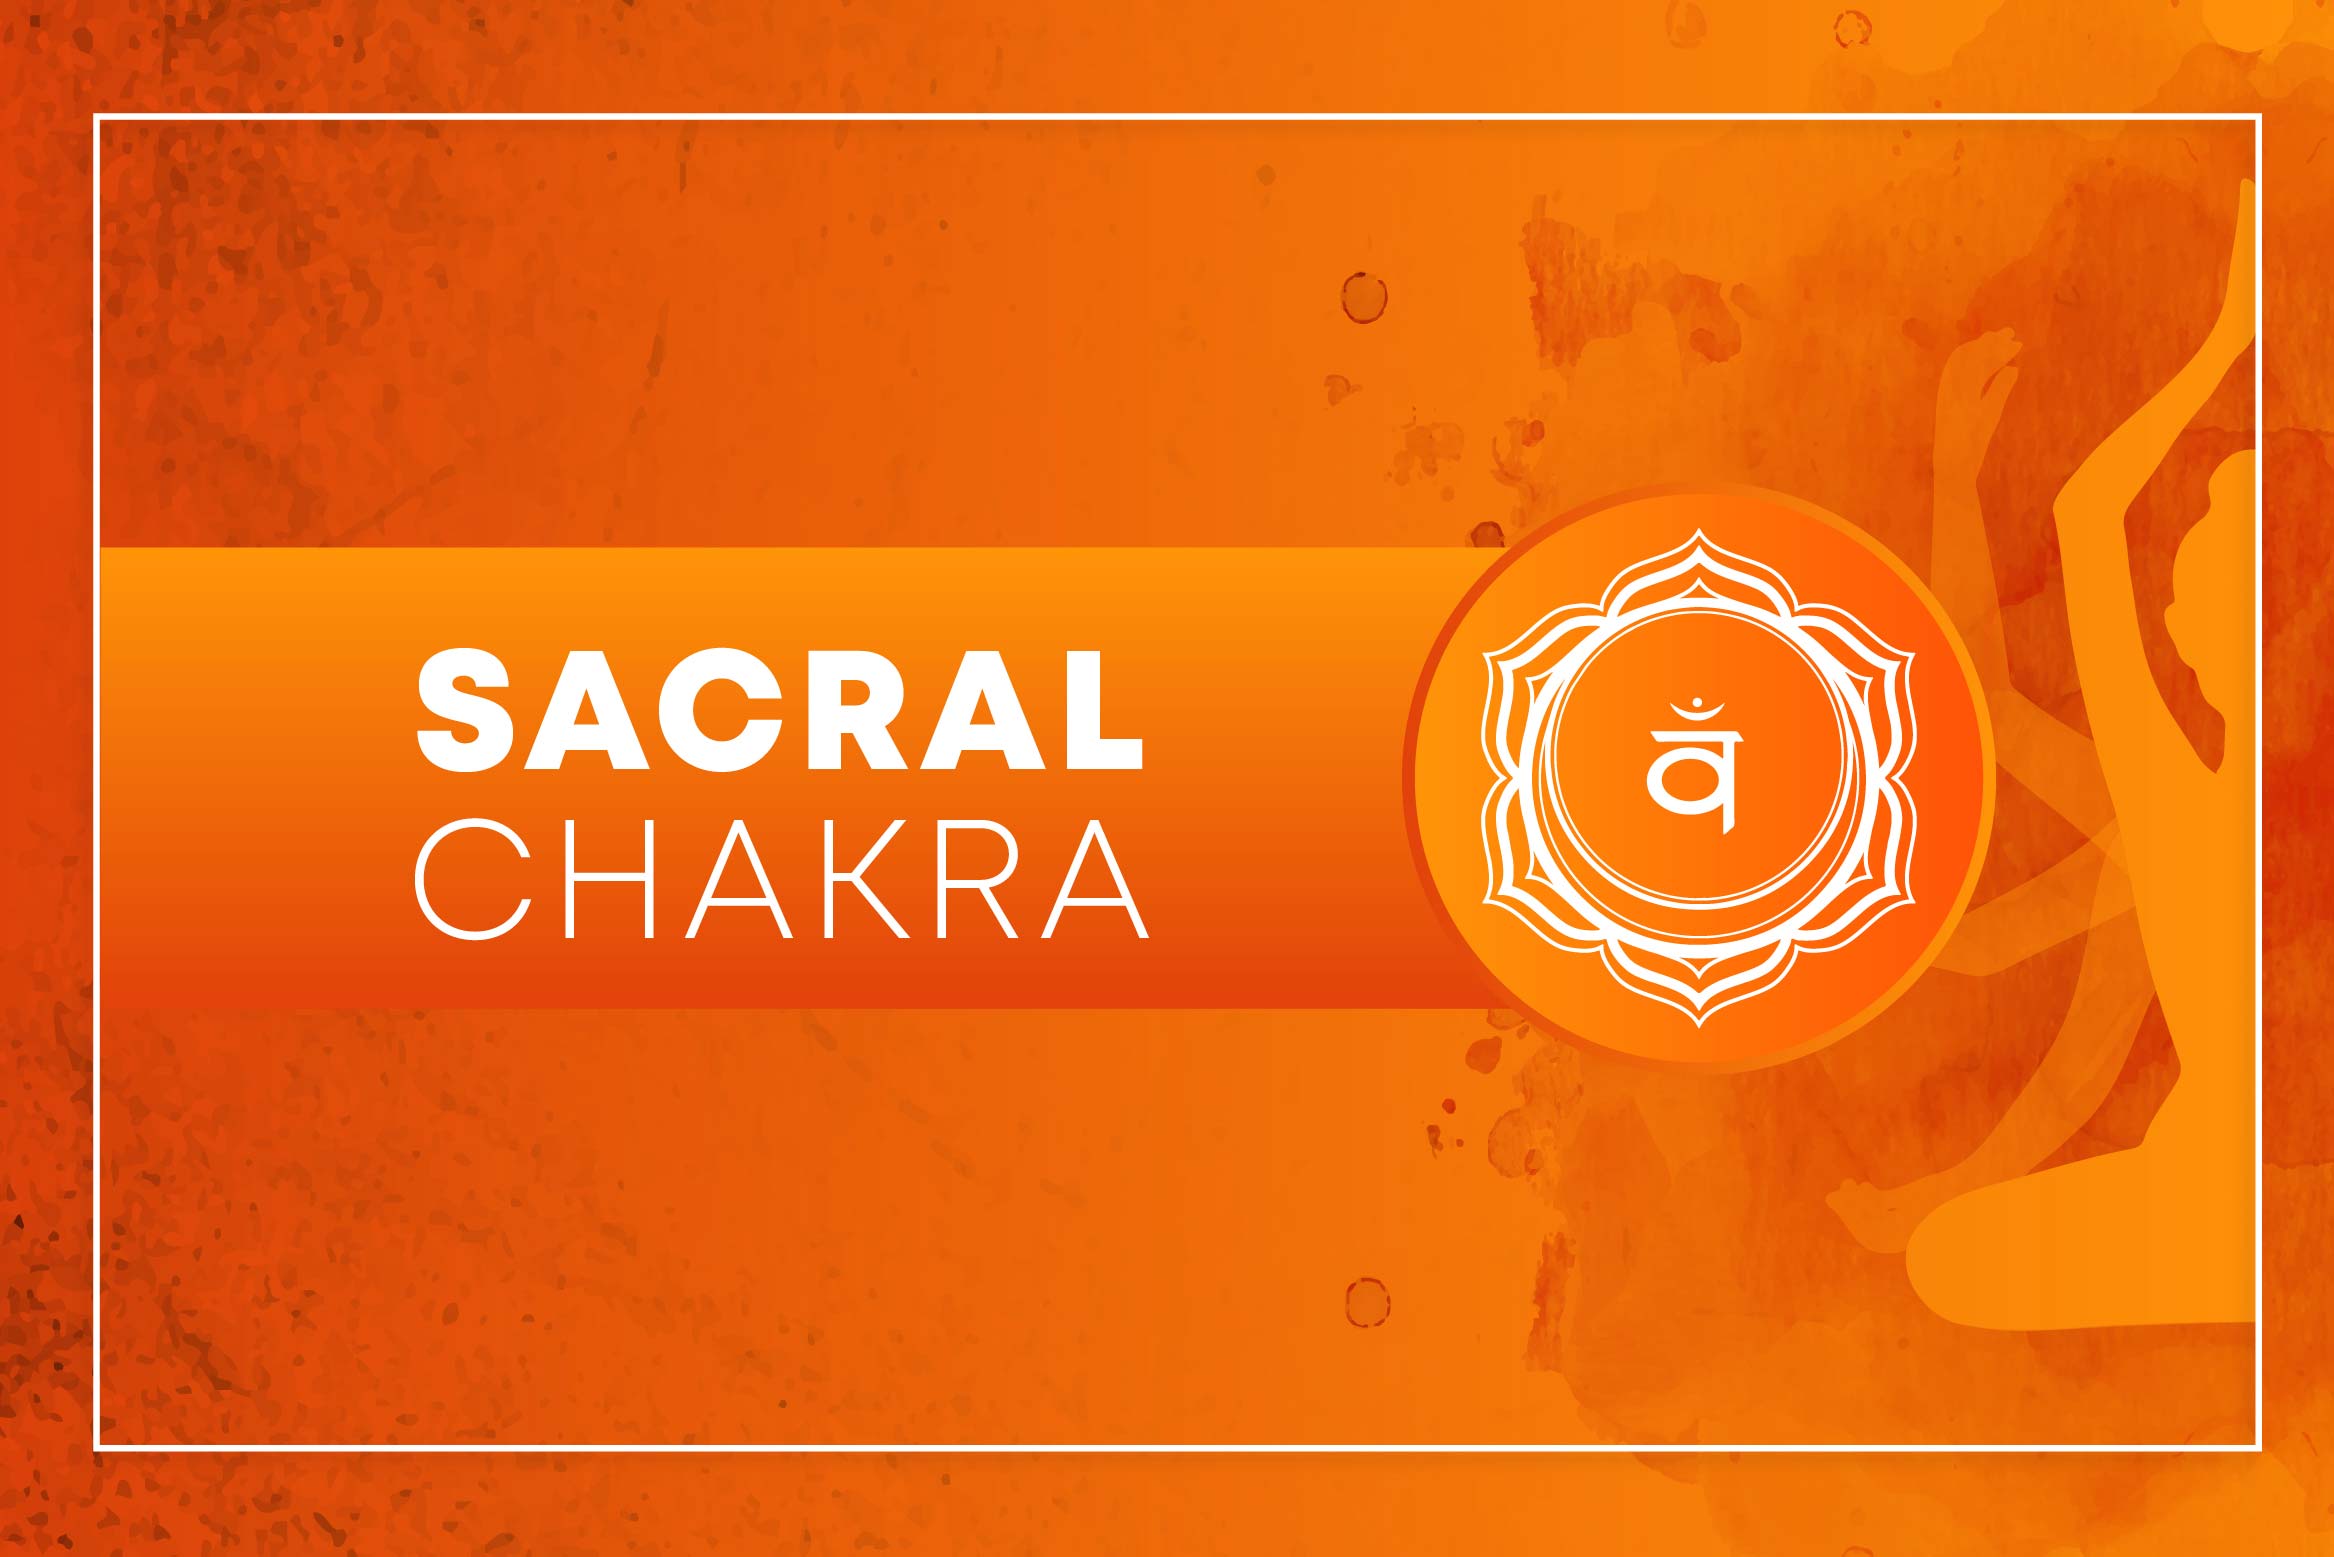 Sacral chakra or swadhisthana chakra